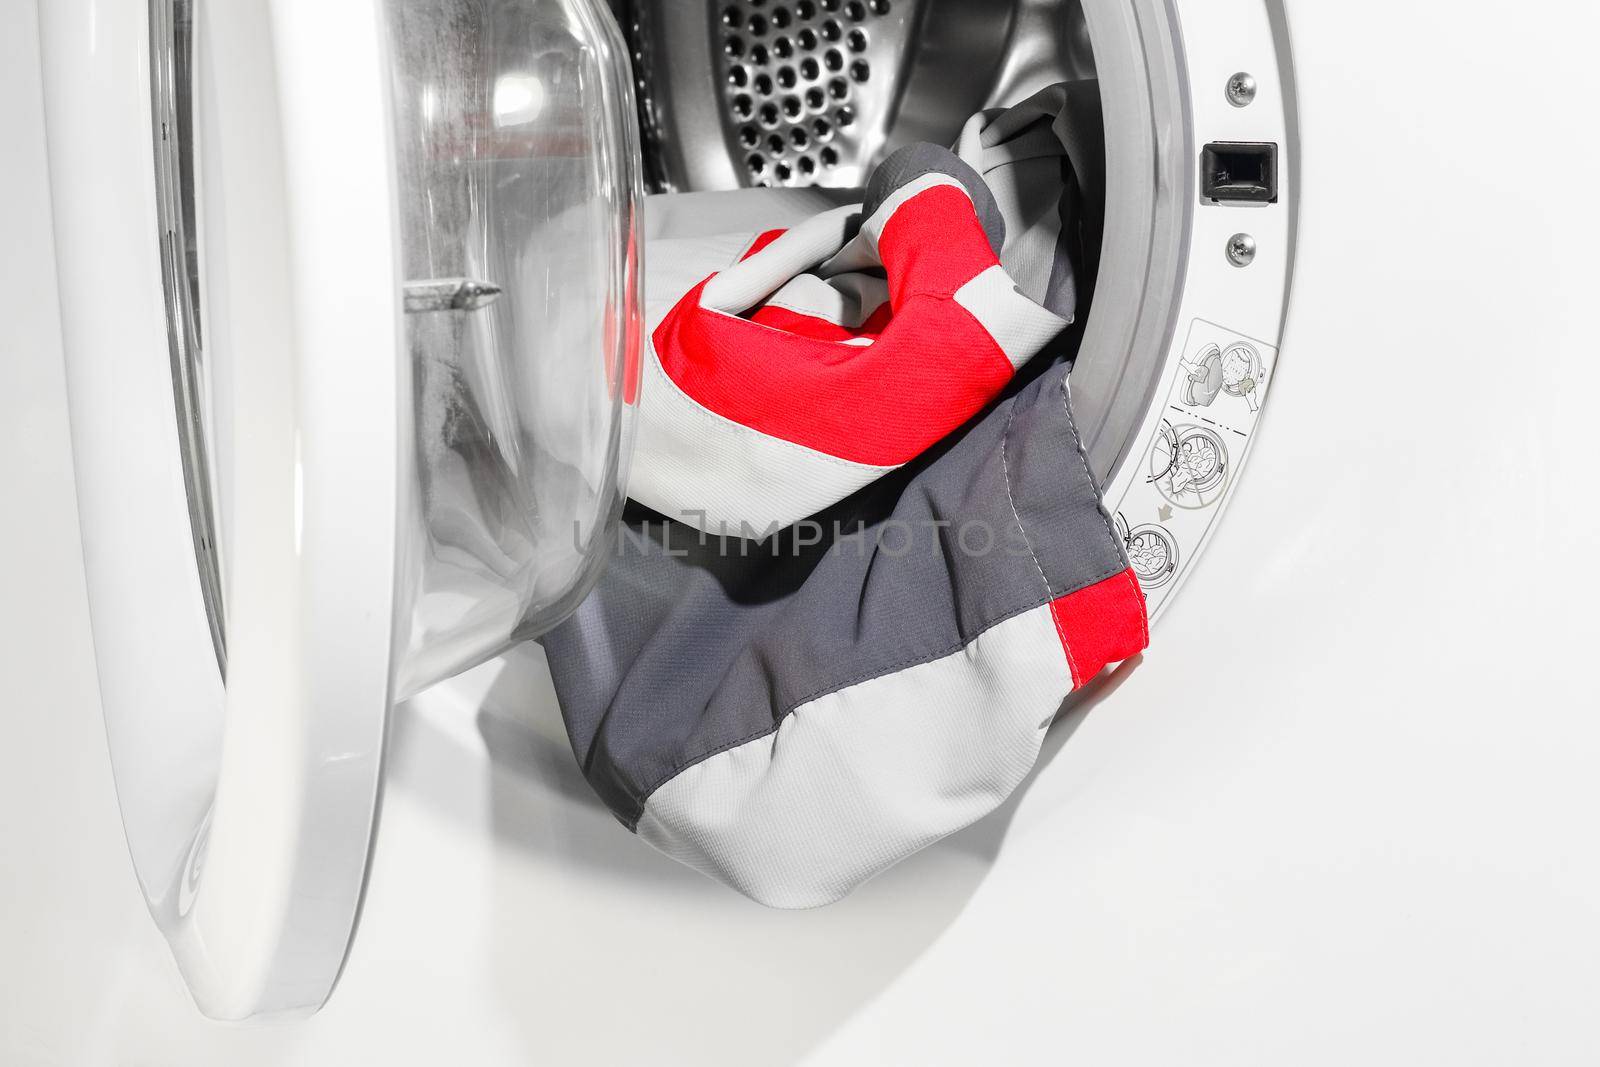 washing machine close - up as background macro by roman112007